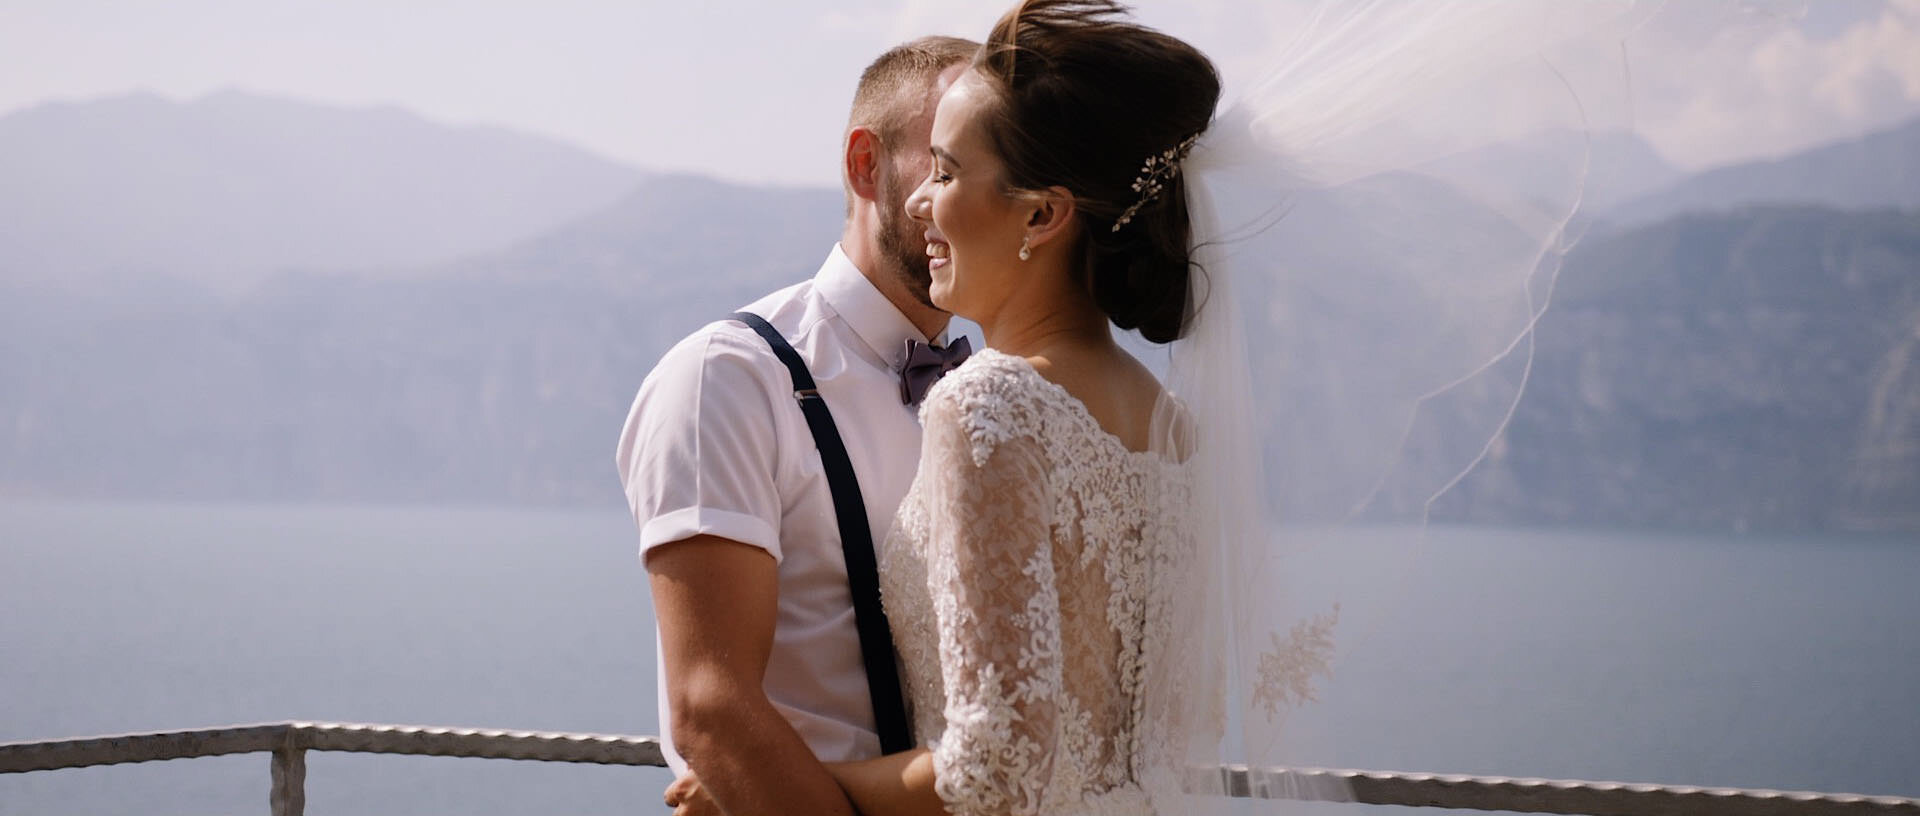 Lisa & Josh's Perfect Malcesine Wedding at Lake Garda 25.jpg